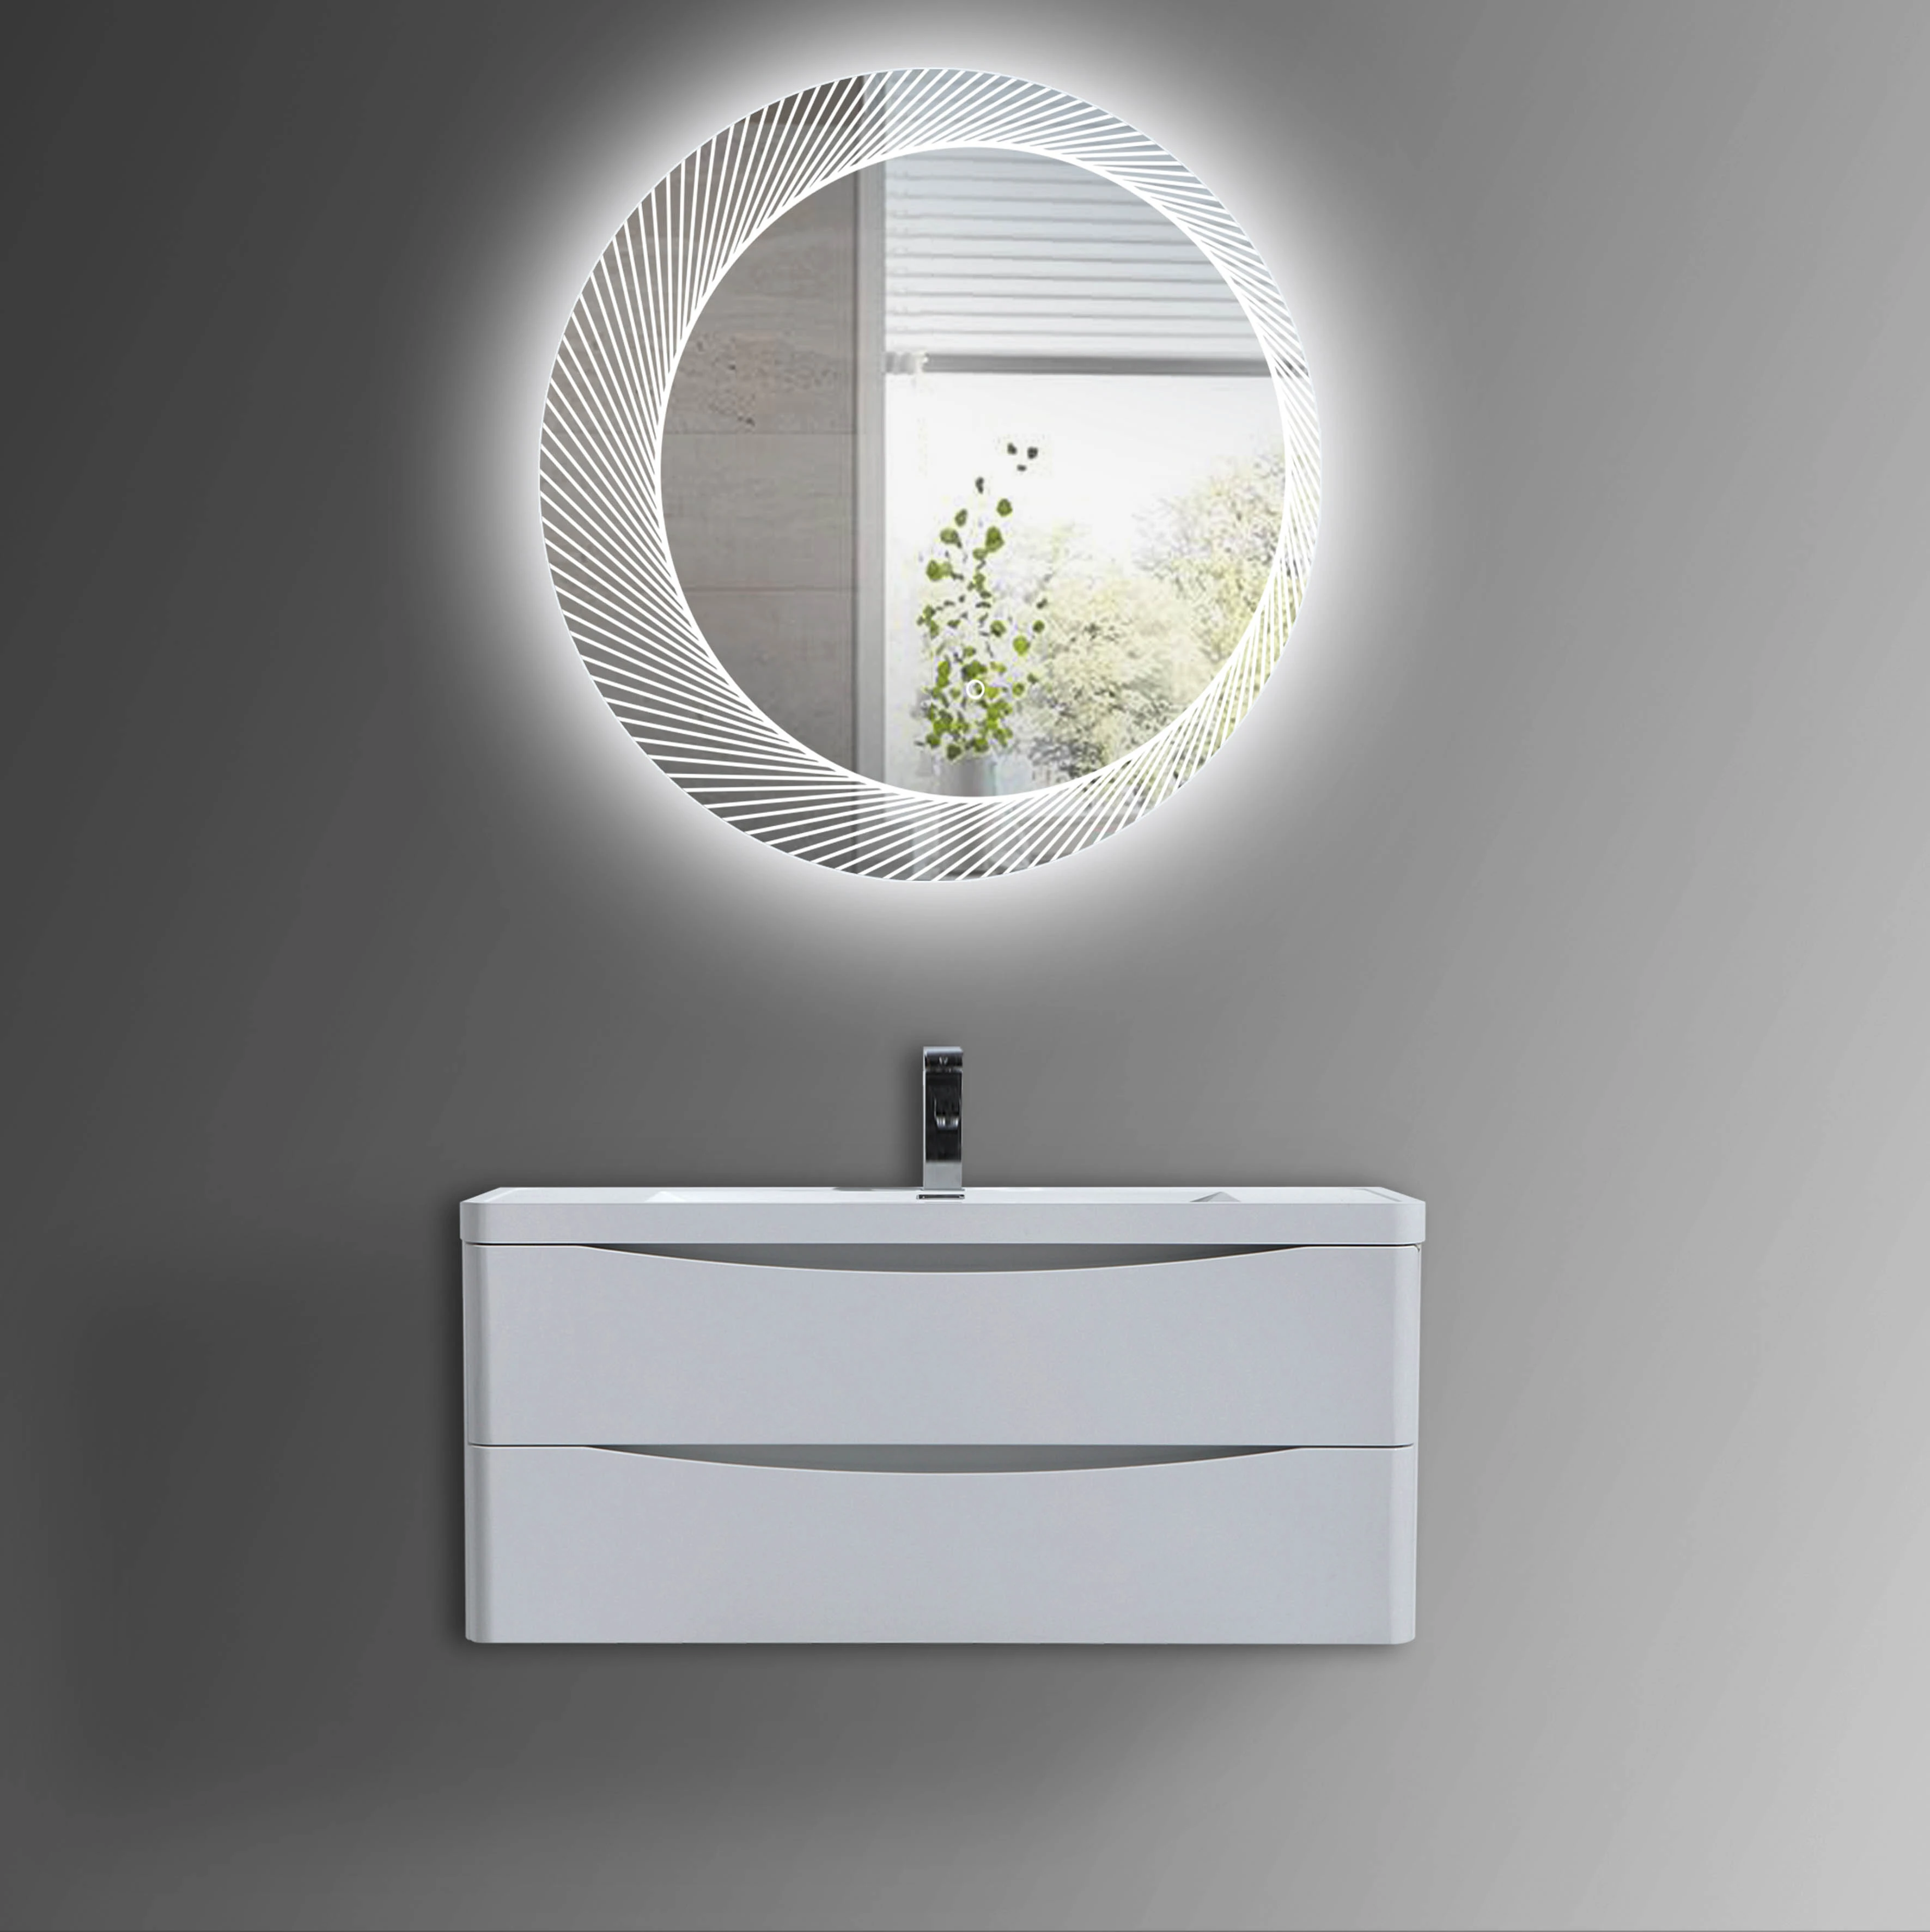 LAM039 Bathroom Mirror With Lights Around It